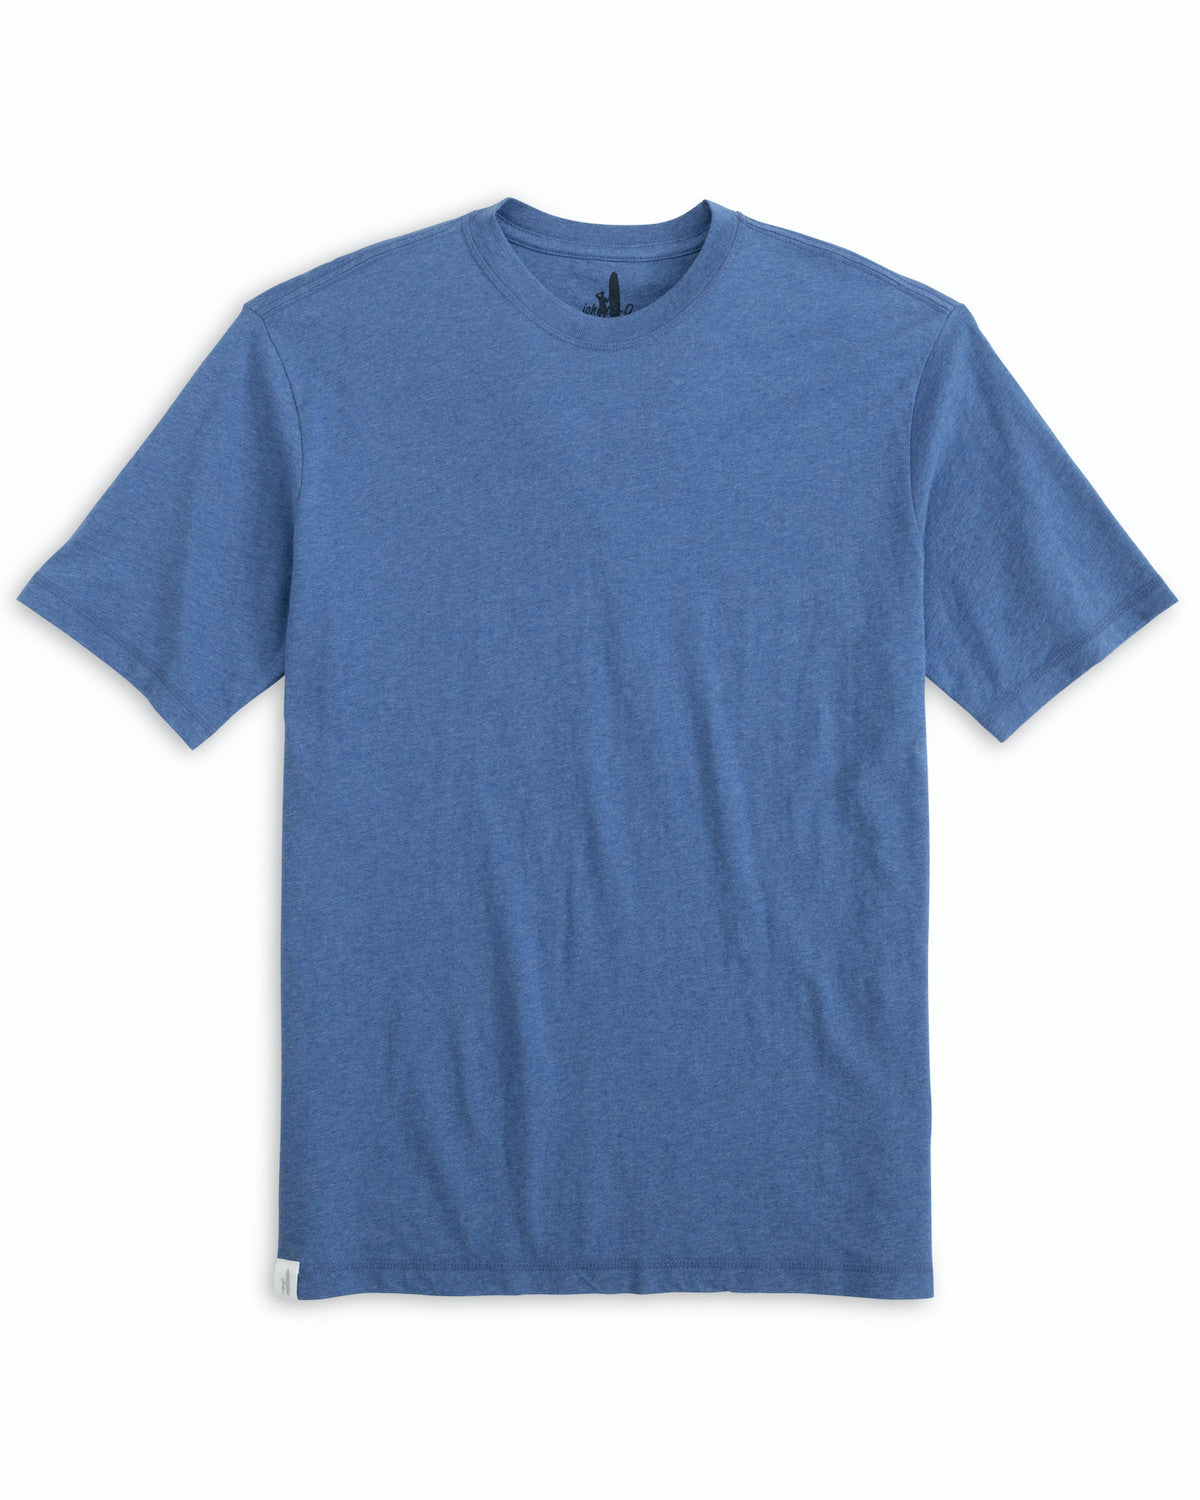 Johnnie-O Men's Heathered Spencer T-Shirt Apparel Johnnie-O Oceanside Small 